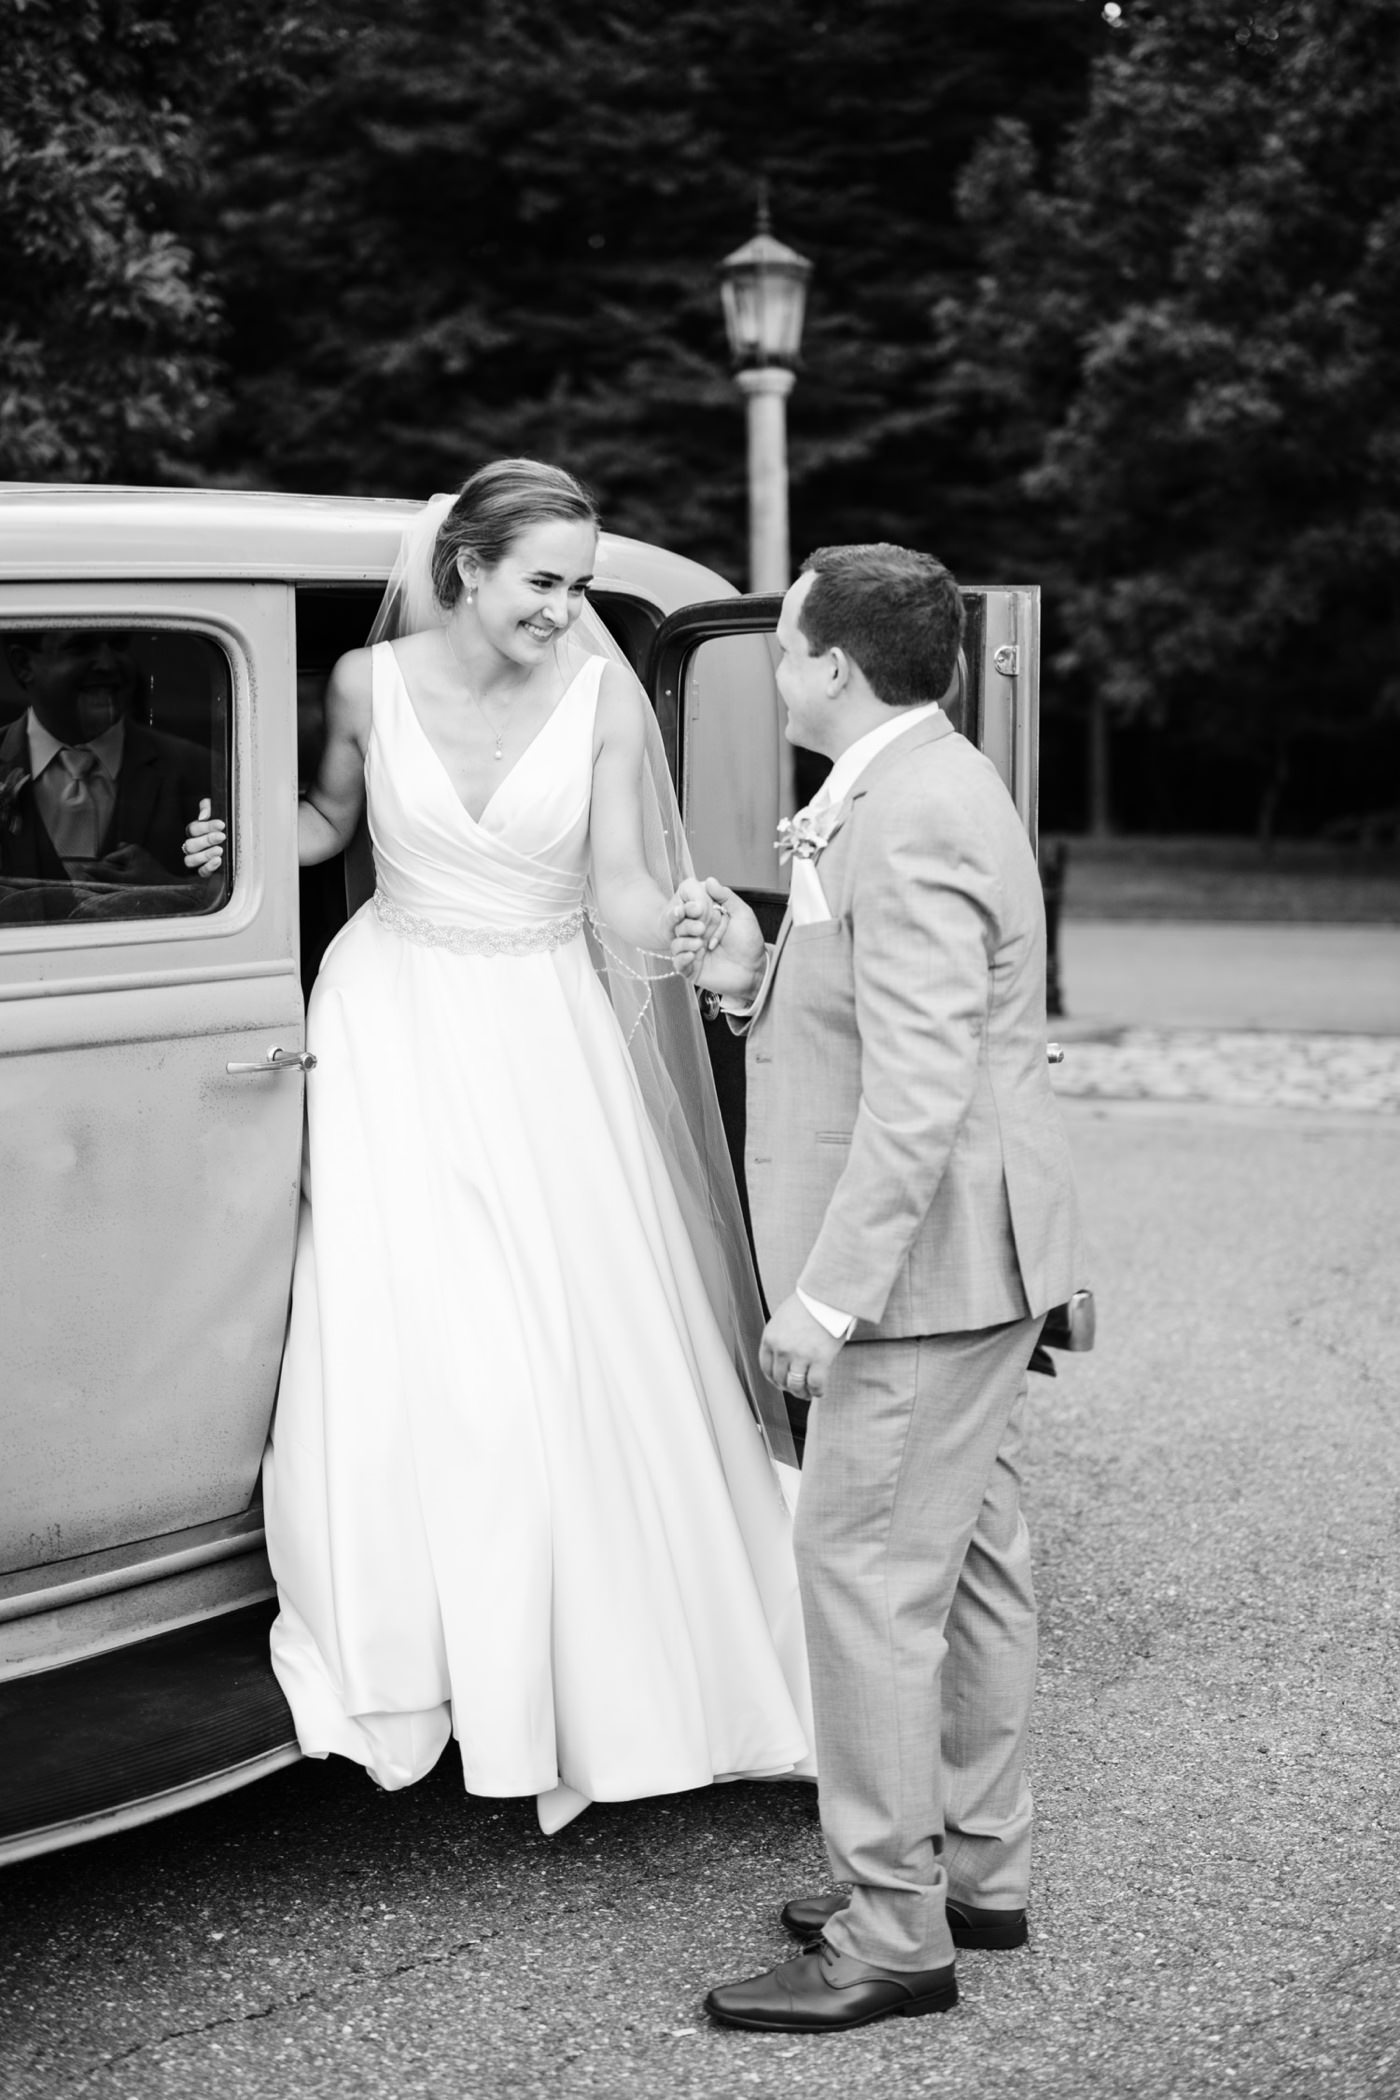 Charlottesville VA wedding photographer, classic car wedding, 